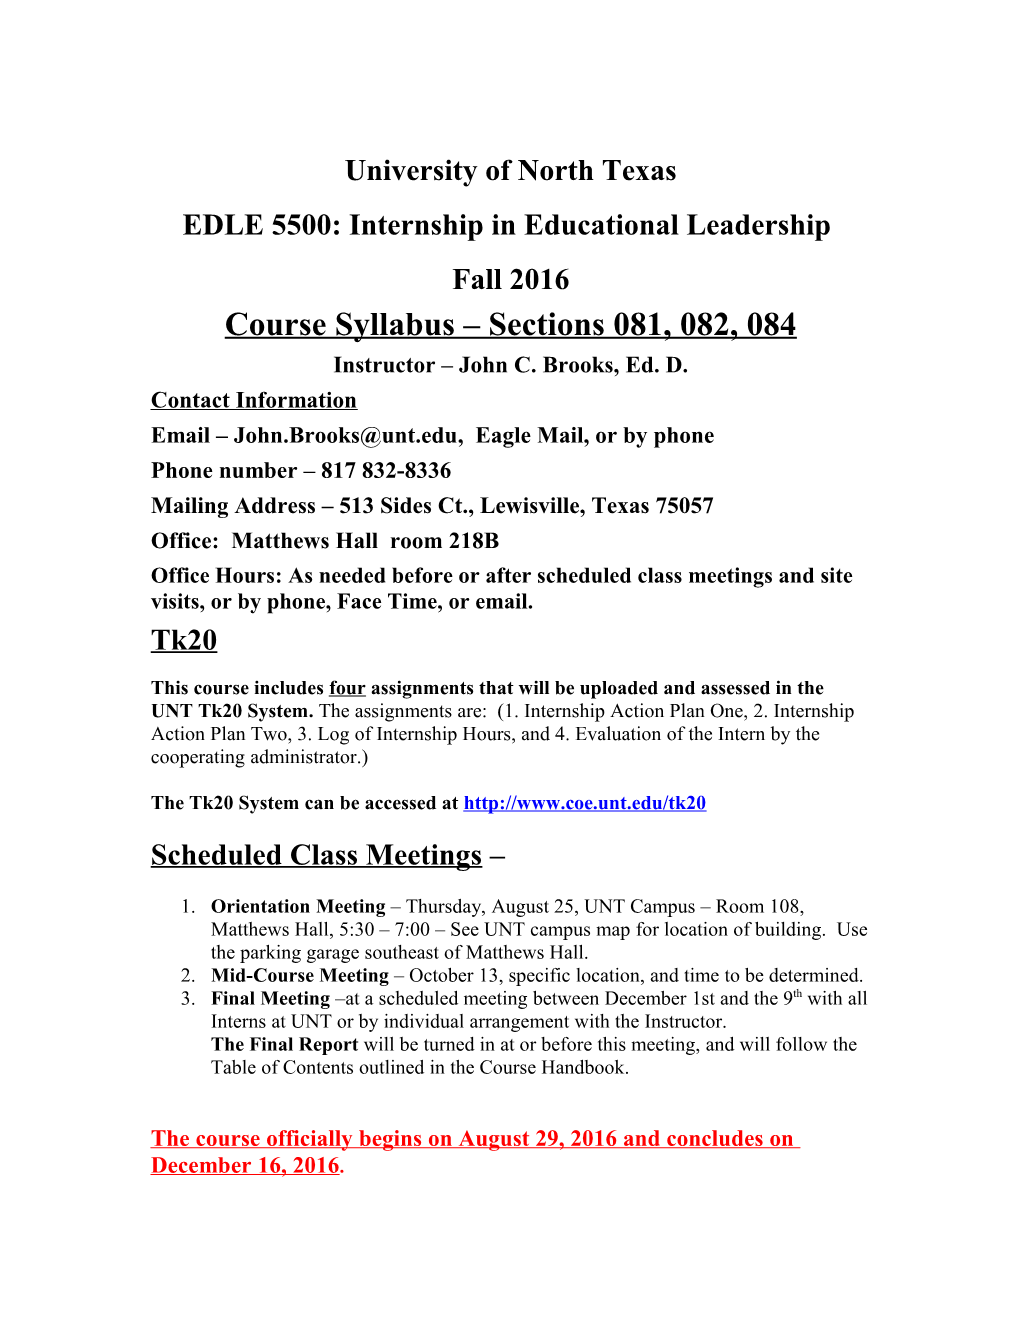 EDLE 5500: Internship in Educational Leadership